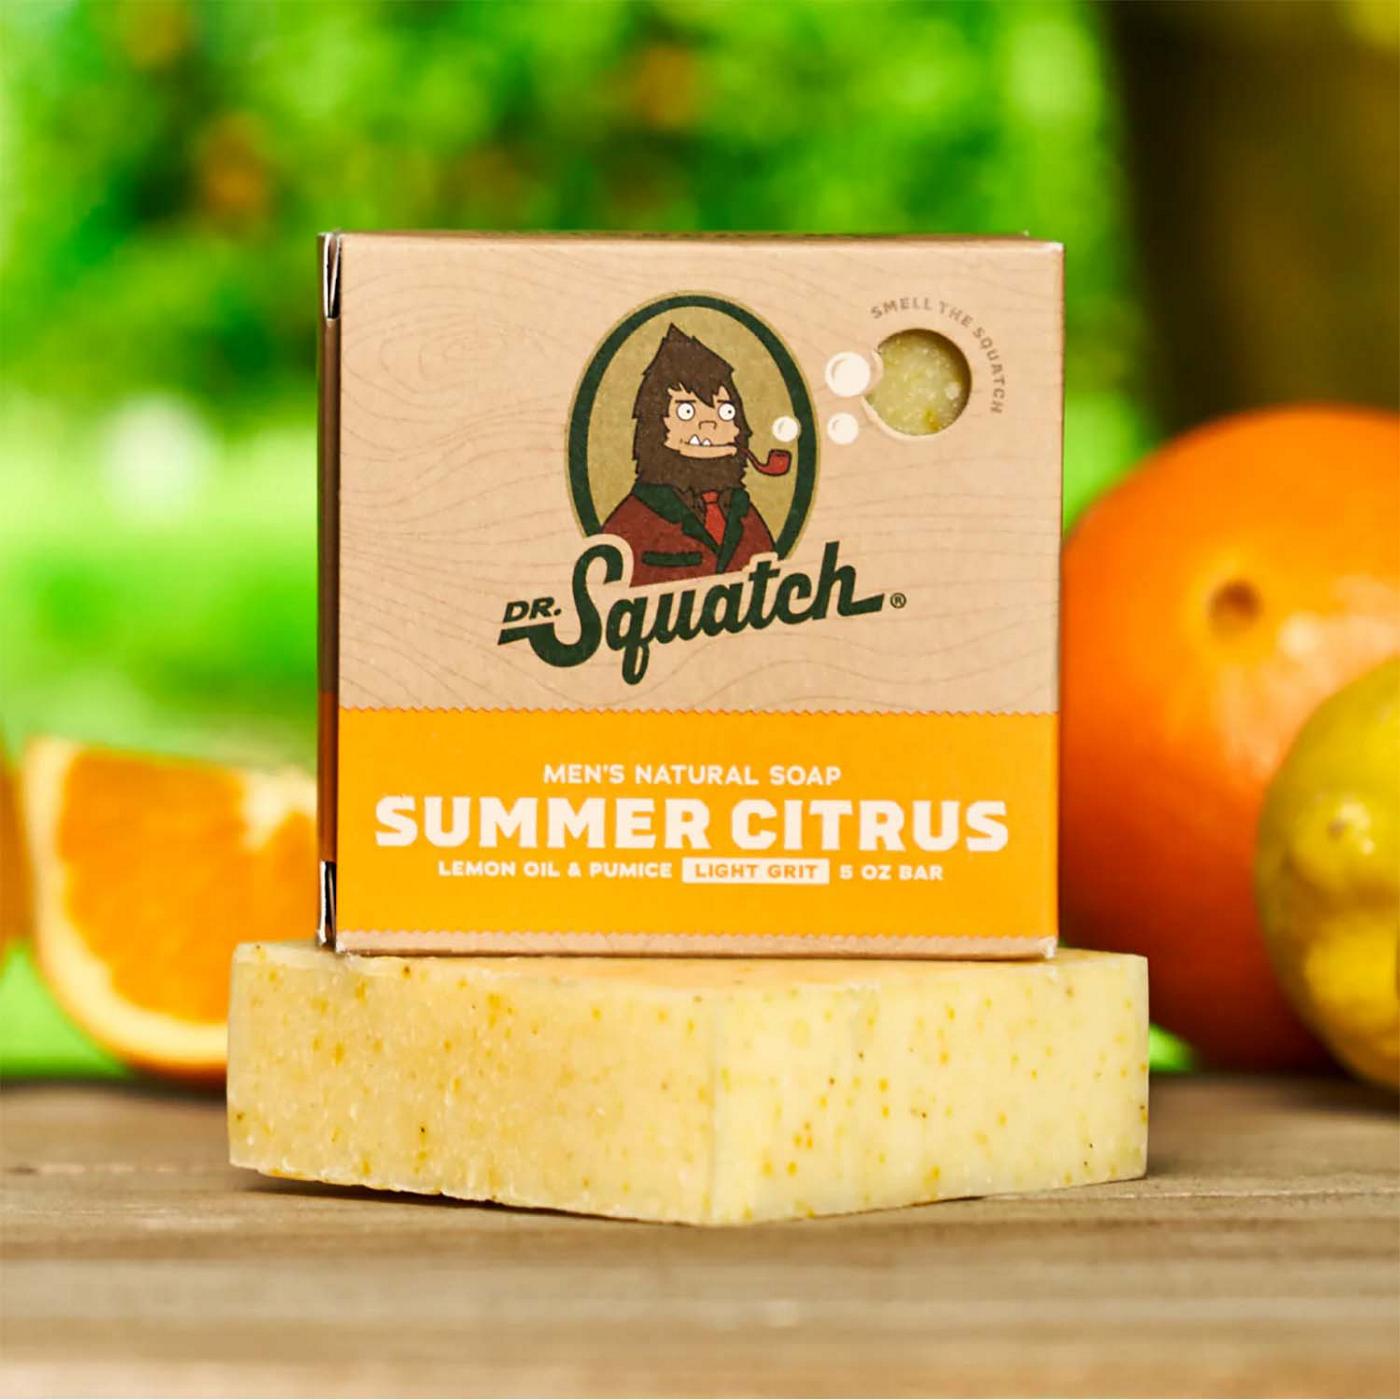 Dr. Squatch Men's Natural Soap - Summer Citrus; image 2 of 5